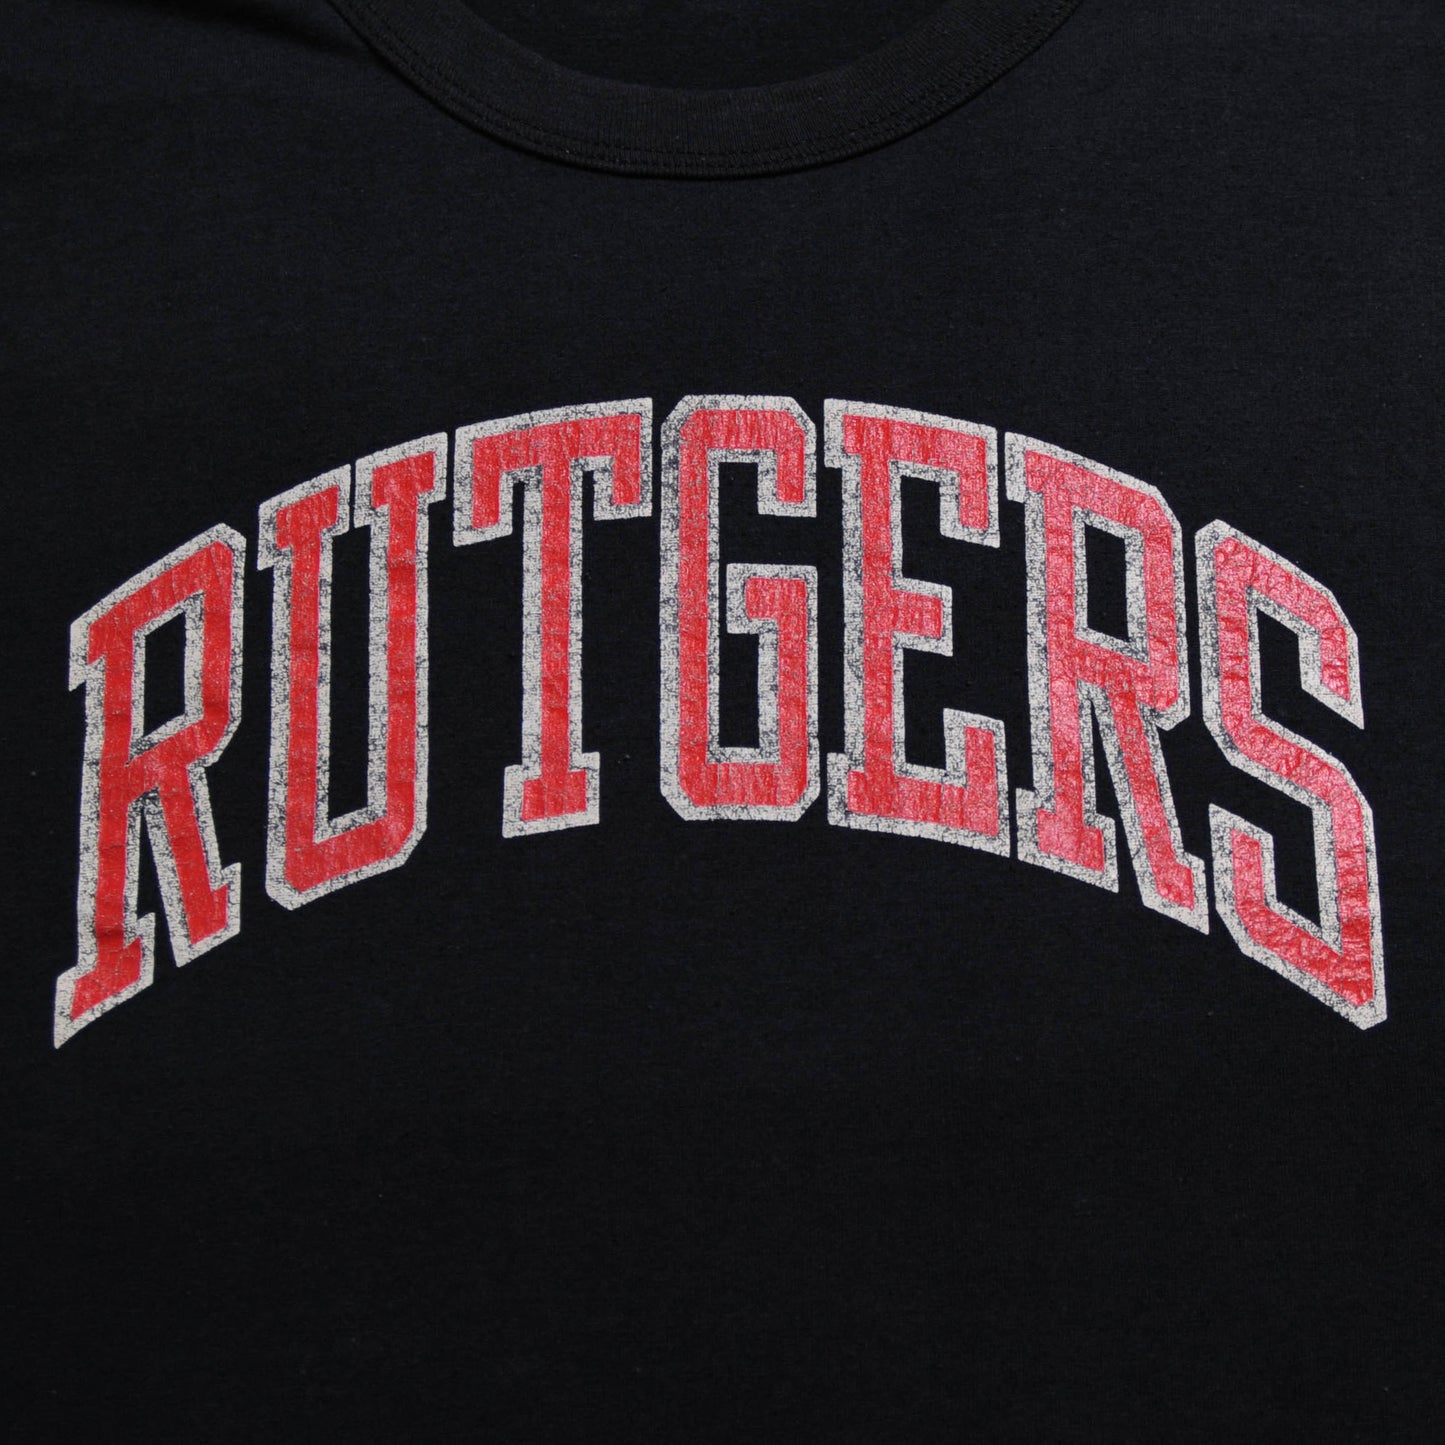 80's champion "RUTGERS" Tシャツ (XL)/A3551T-O